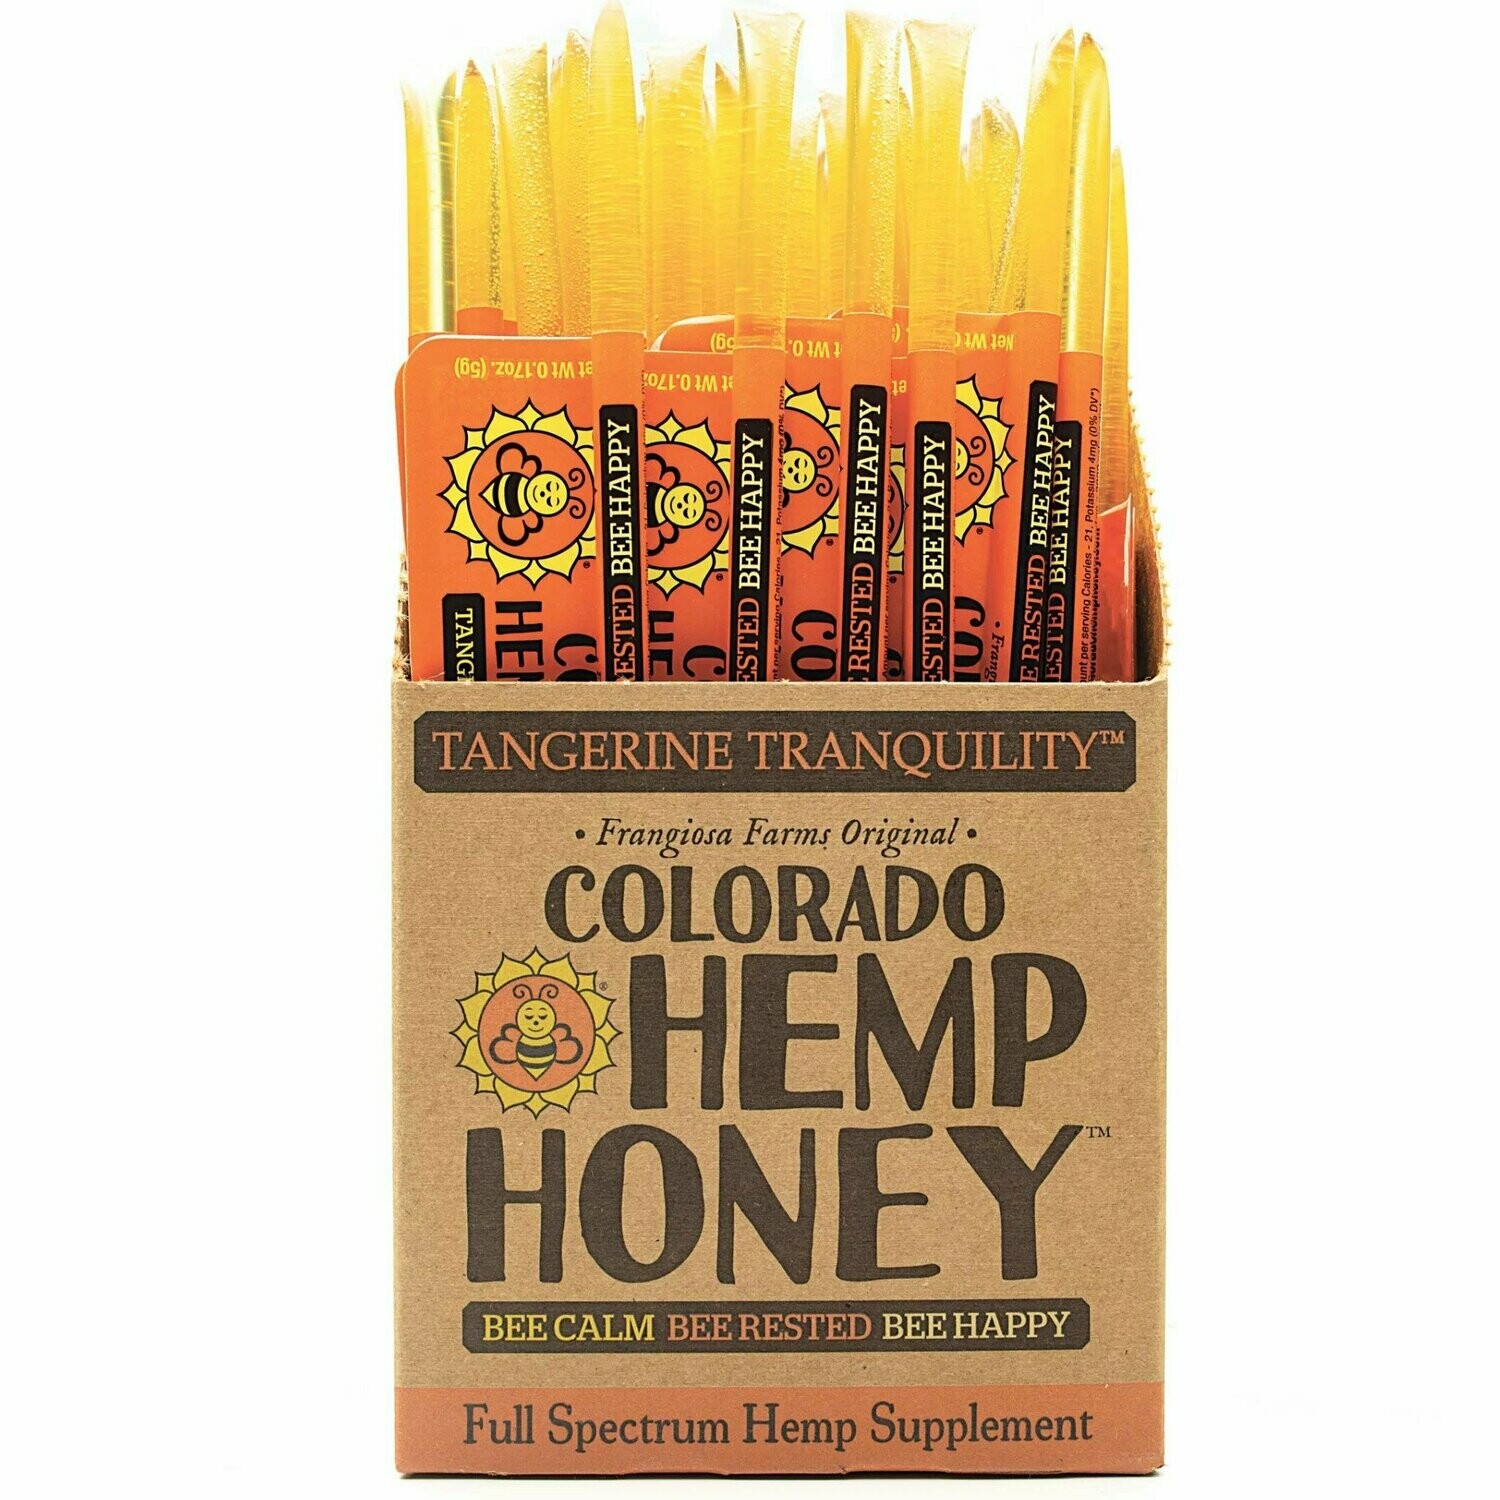 Tangerine Tranquility Honey Sticks